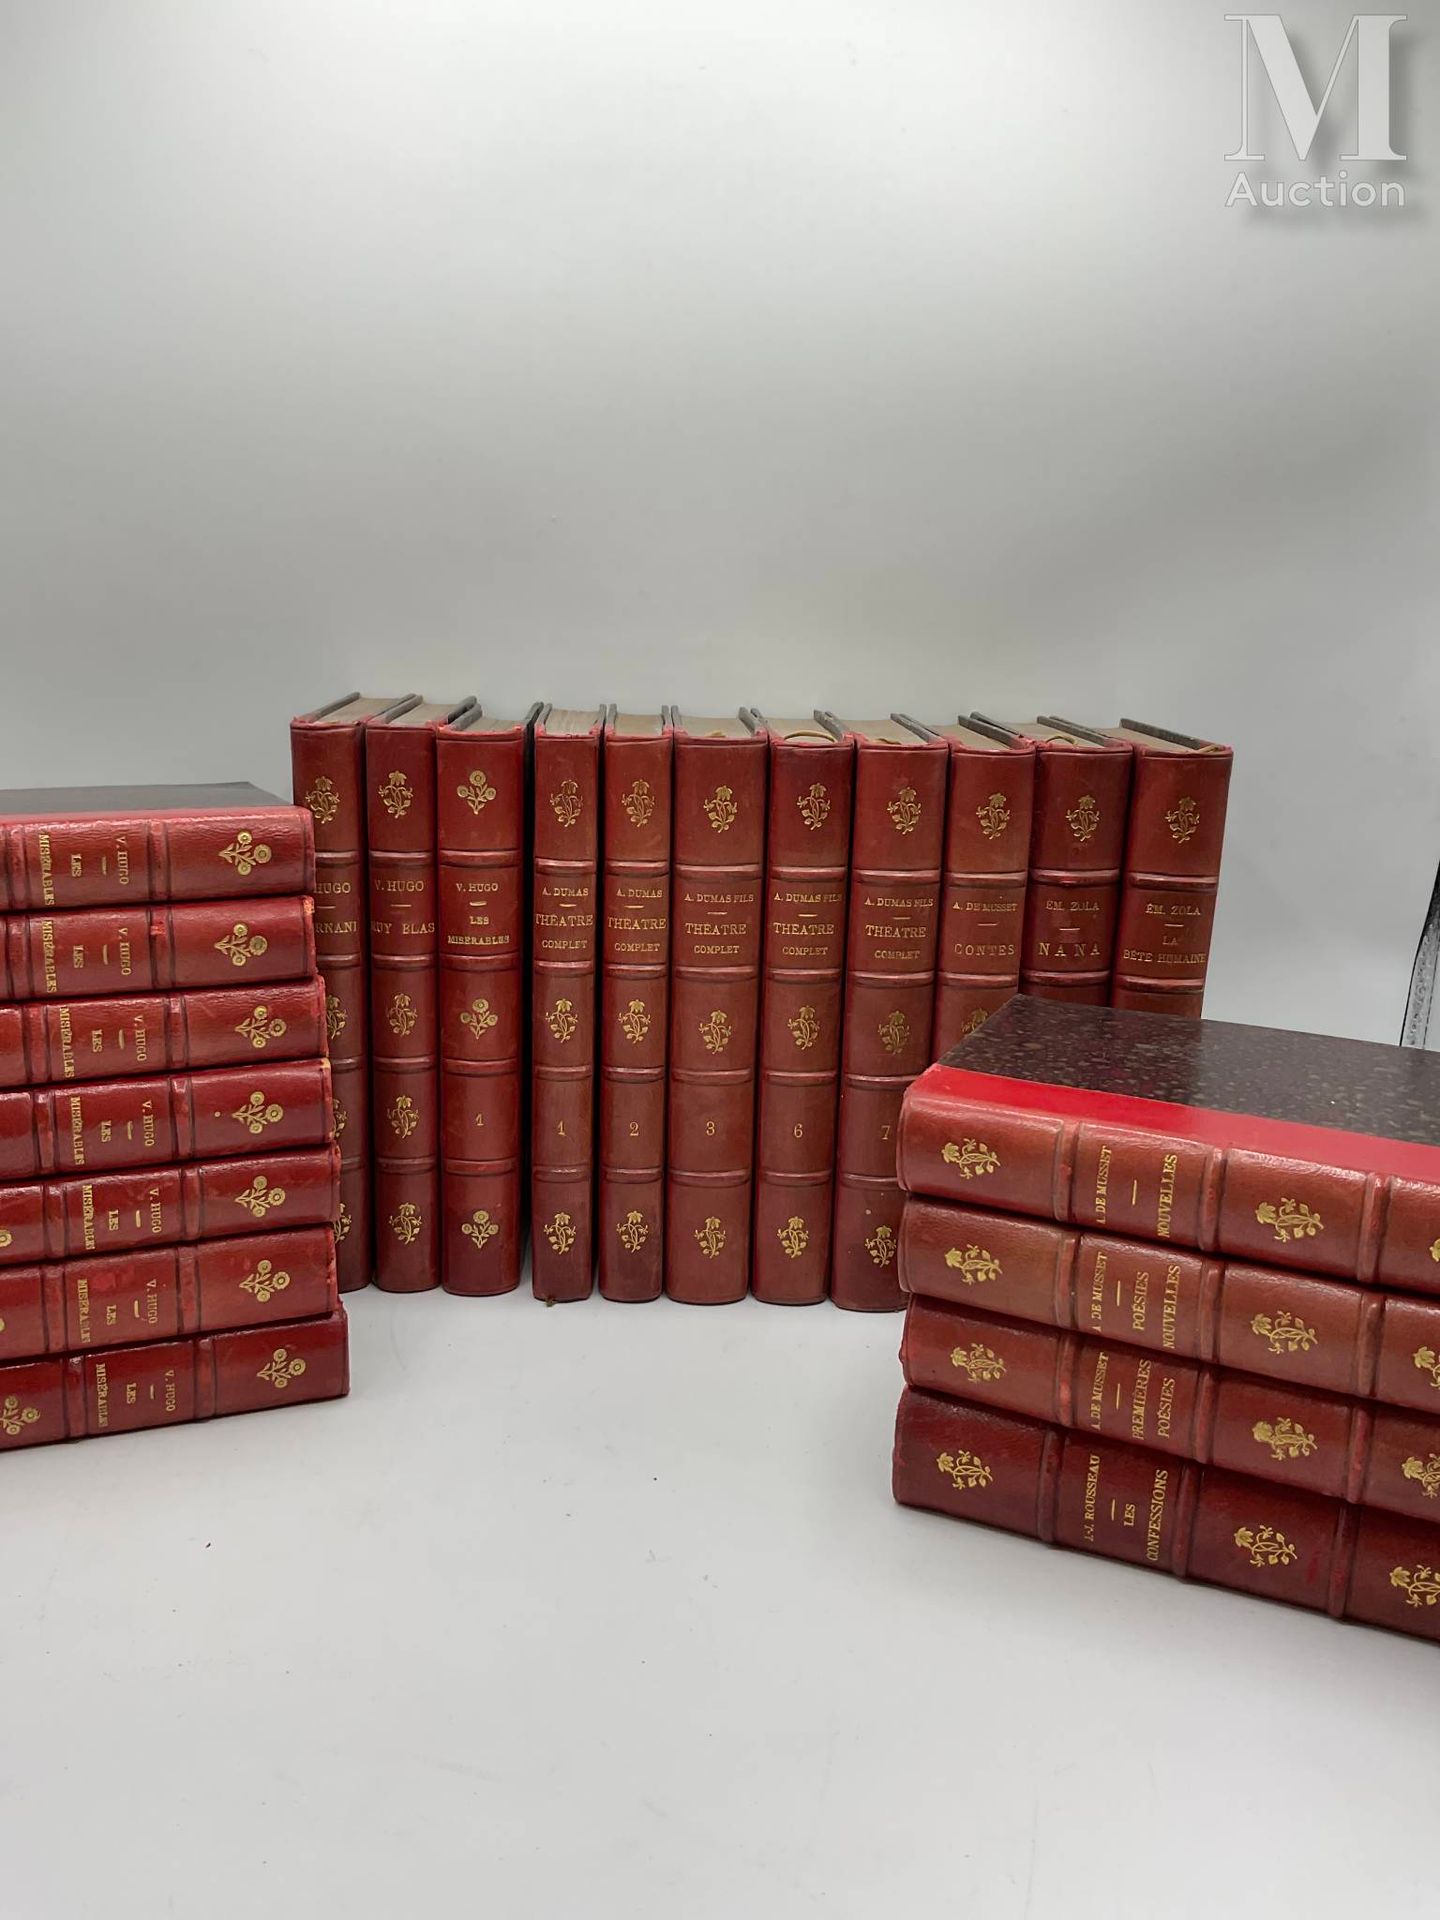 Bibliothèque Charpentier, 22 volumes - Nana, Emile Zola
- La Bête humaine (Die B&hellip;